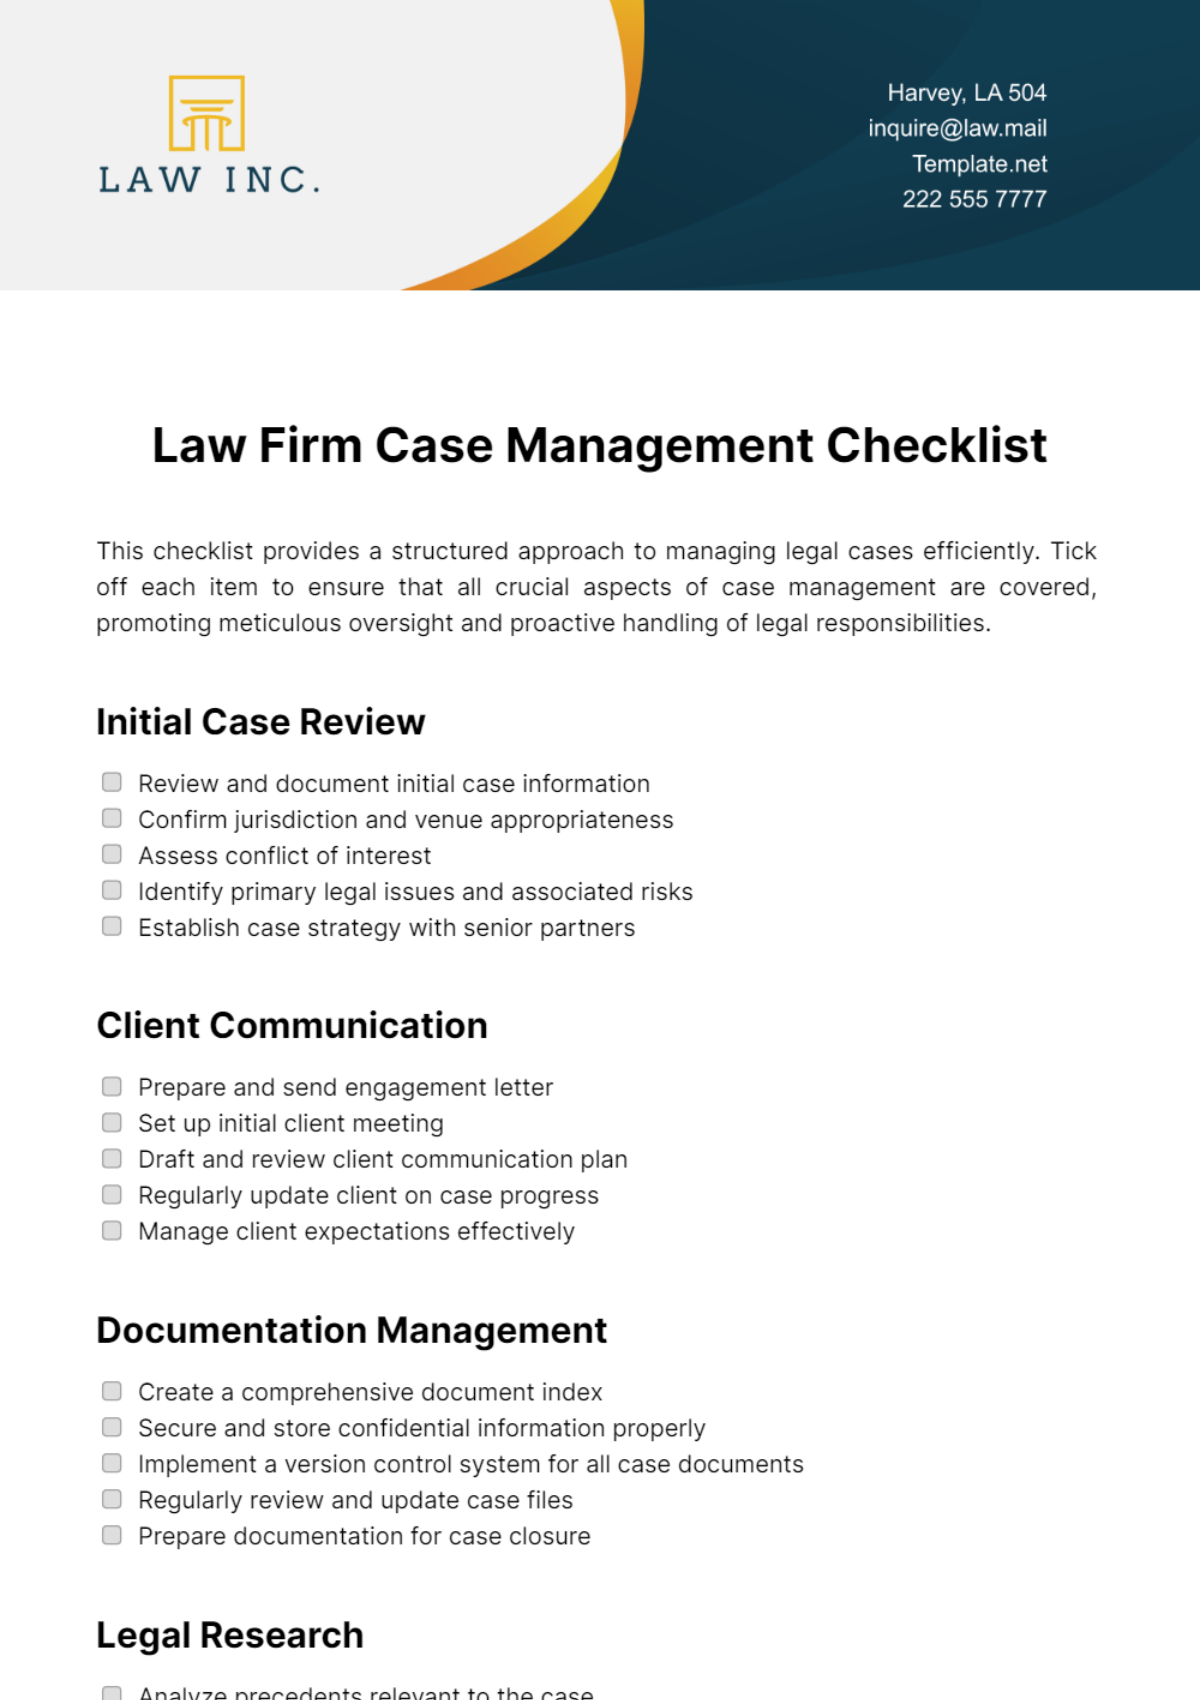 Law Firm Case Management Checklist Template